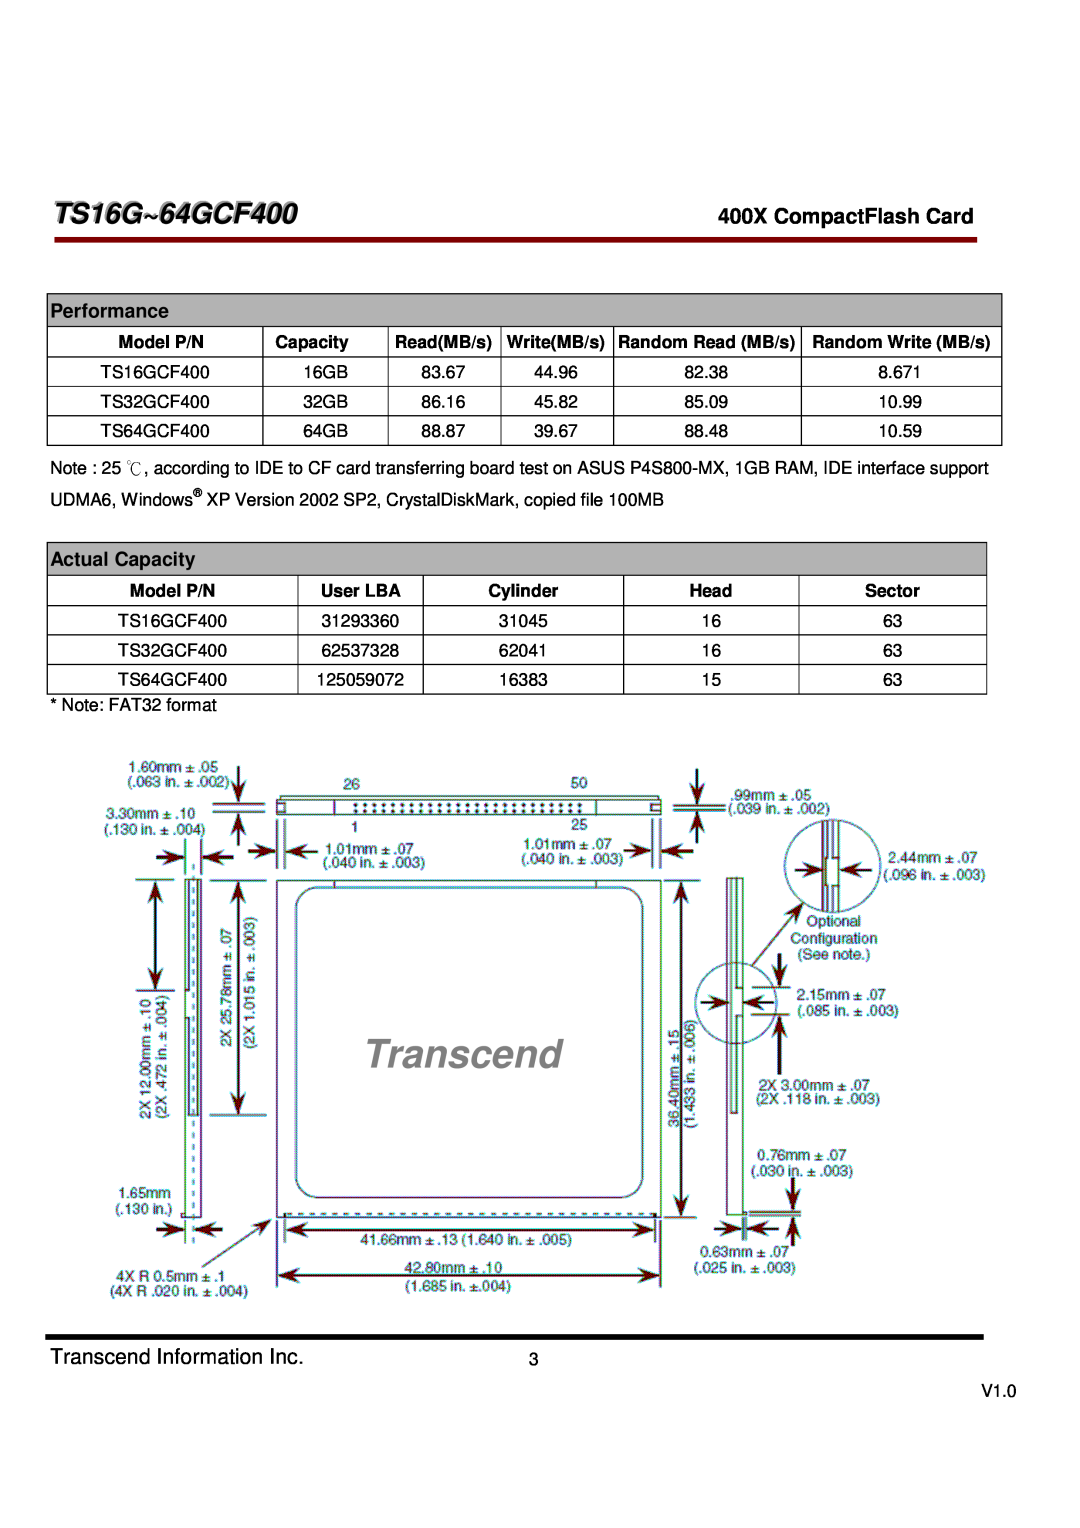 Transcend Information TS16G~64GCF400, Transcend Information Inc, 400X CompactFlash Card, Model P/N, Capacity 